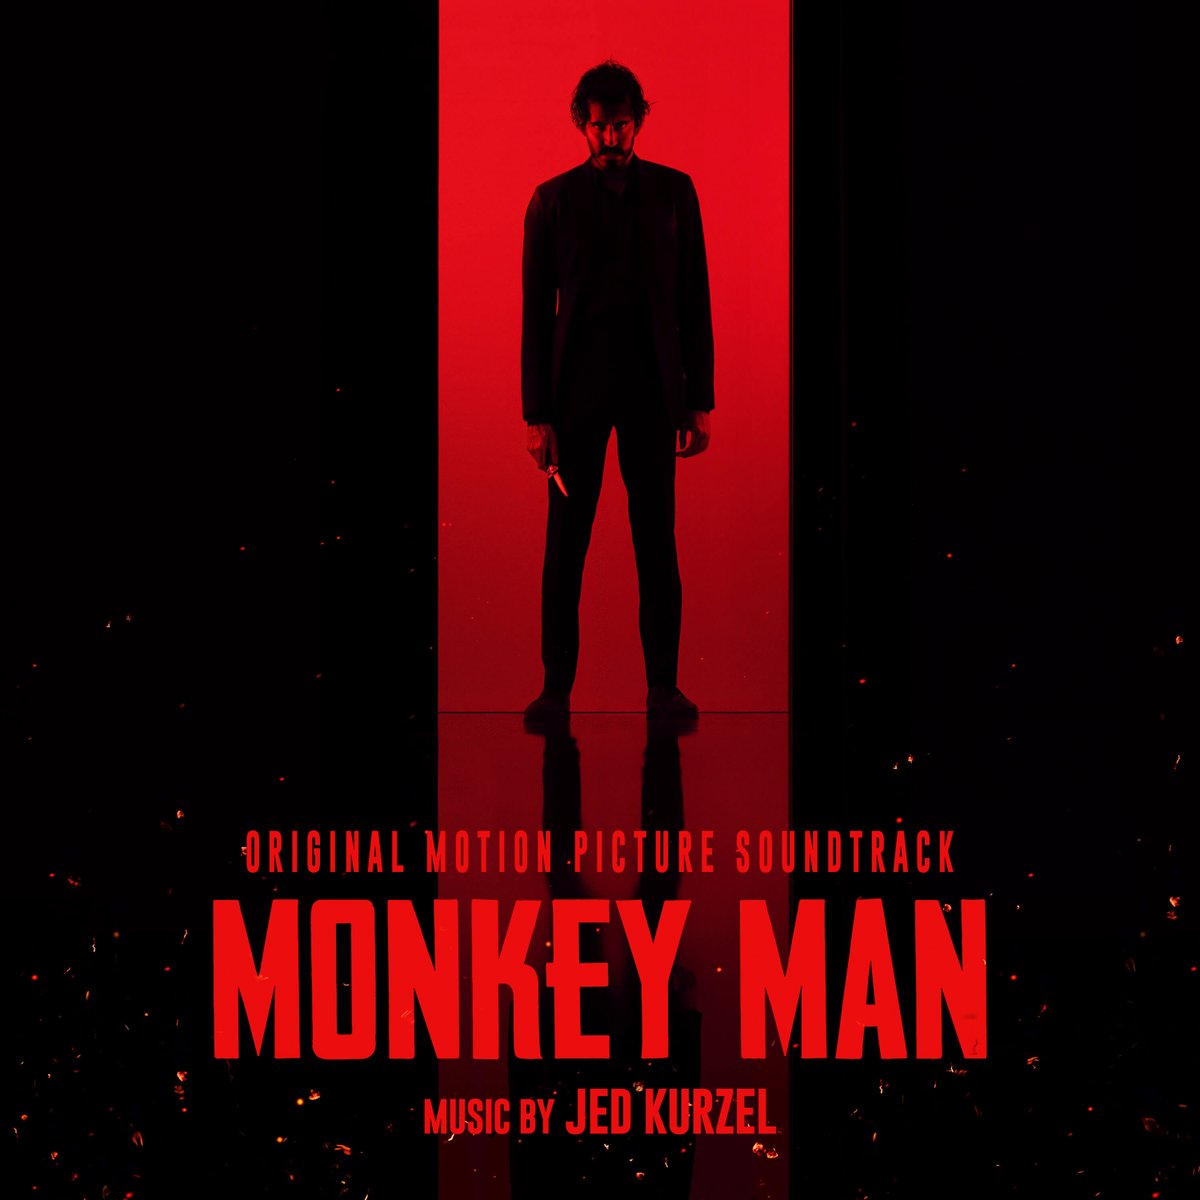 Detalles de la banda sonora 'Monkey Man' (2023) con música de Jed Kurzel.
➡️ asturscore.com/noticias/back-…
#newsAsturScore #BandaSonora #BSO #MonkeyManMovie @monkeymanmovie #JedKurzel @BackLotMusic